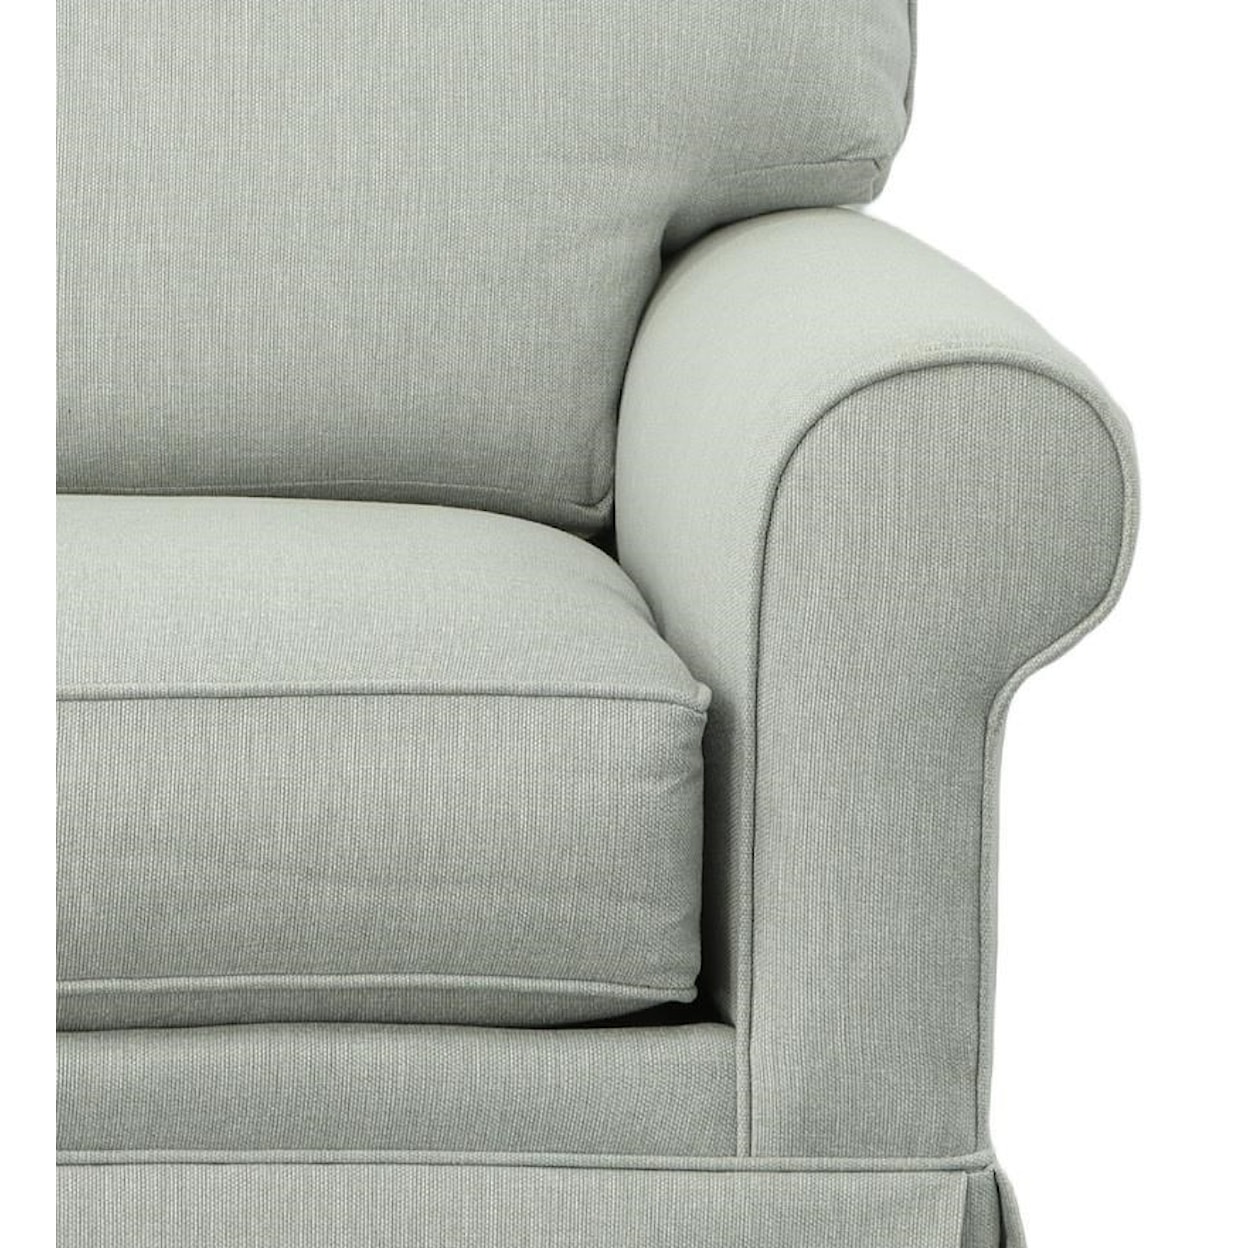 Rowe My Style I Customizable Chair